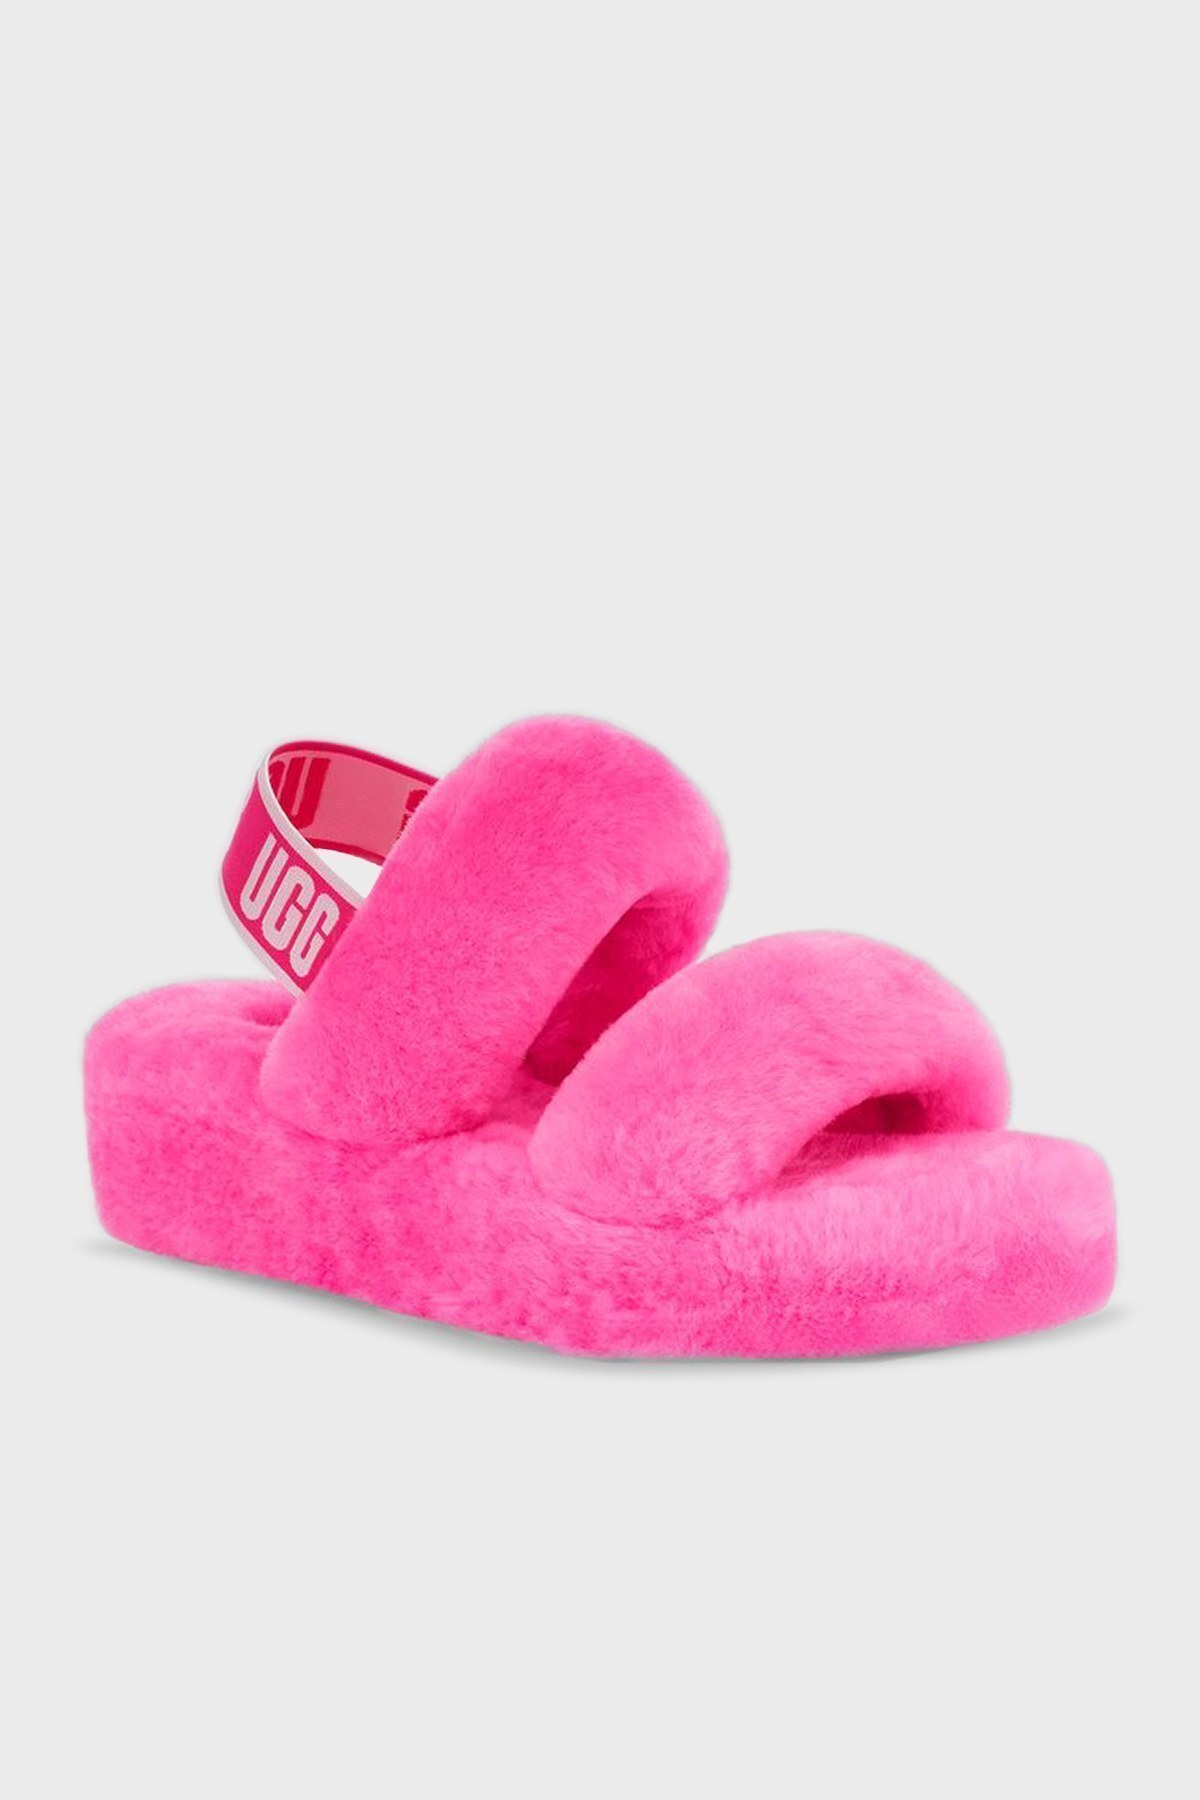 discount 87% NoName sliders WOMEN FASHION Footwear Print Pink 38                  EU 